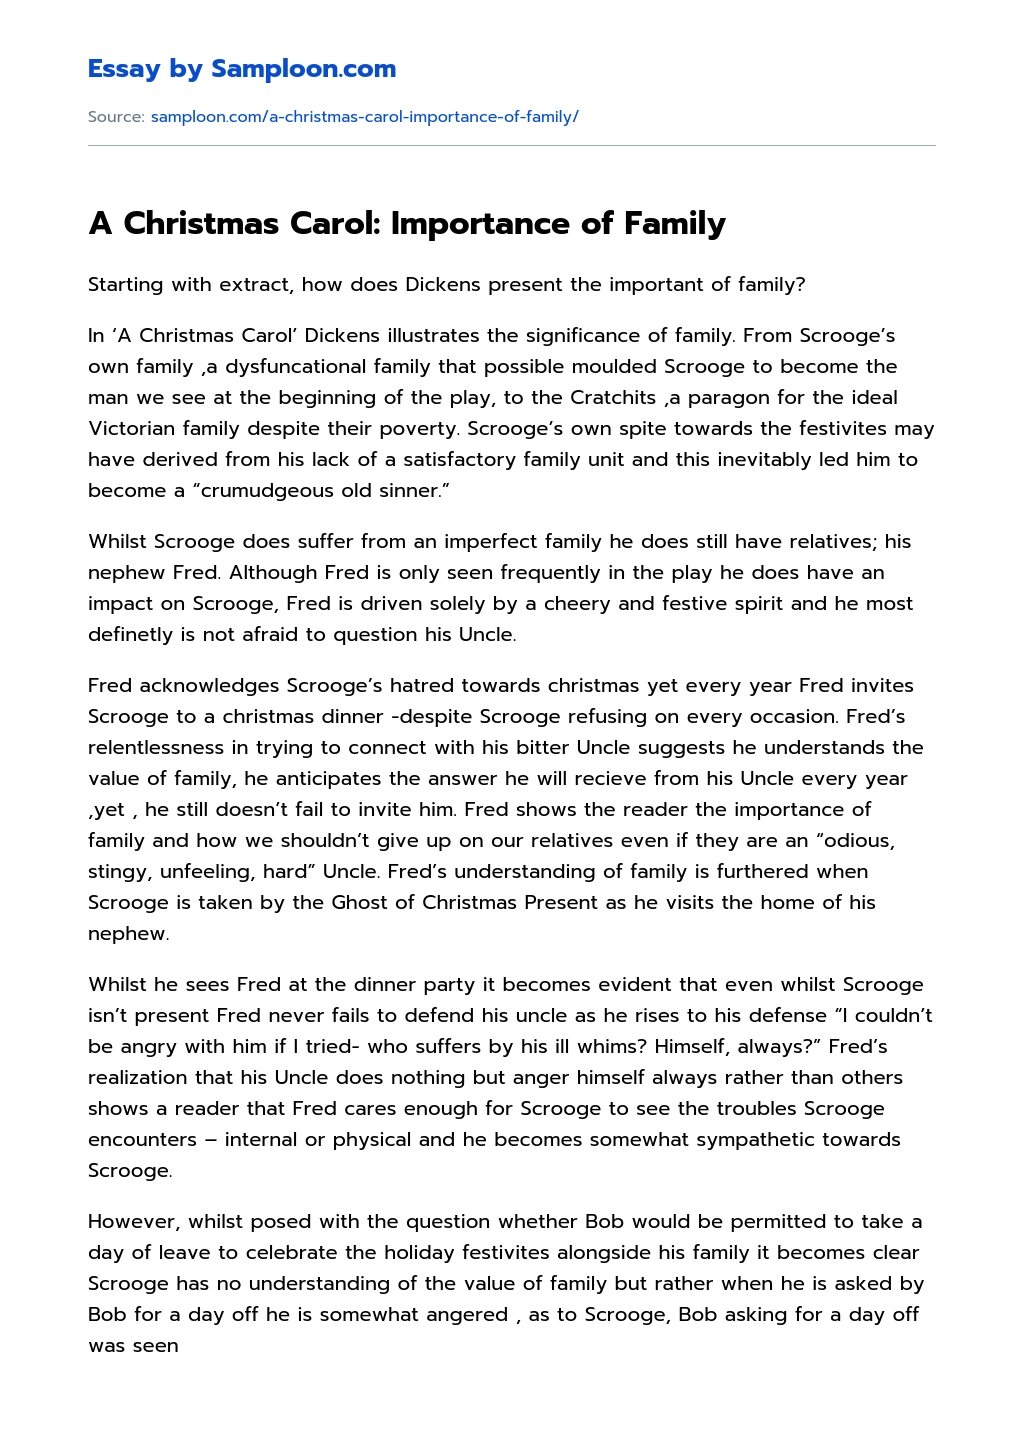 A Christmas Carol: Importance of Family Analytical Essay essay